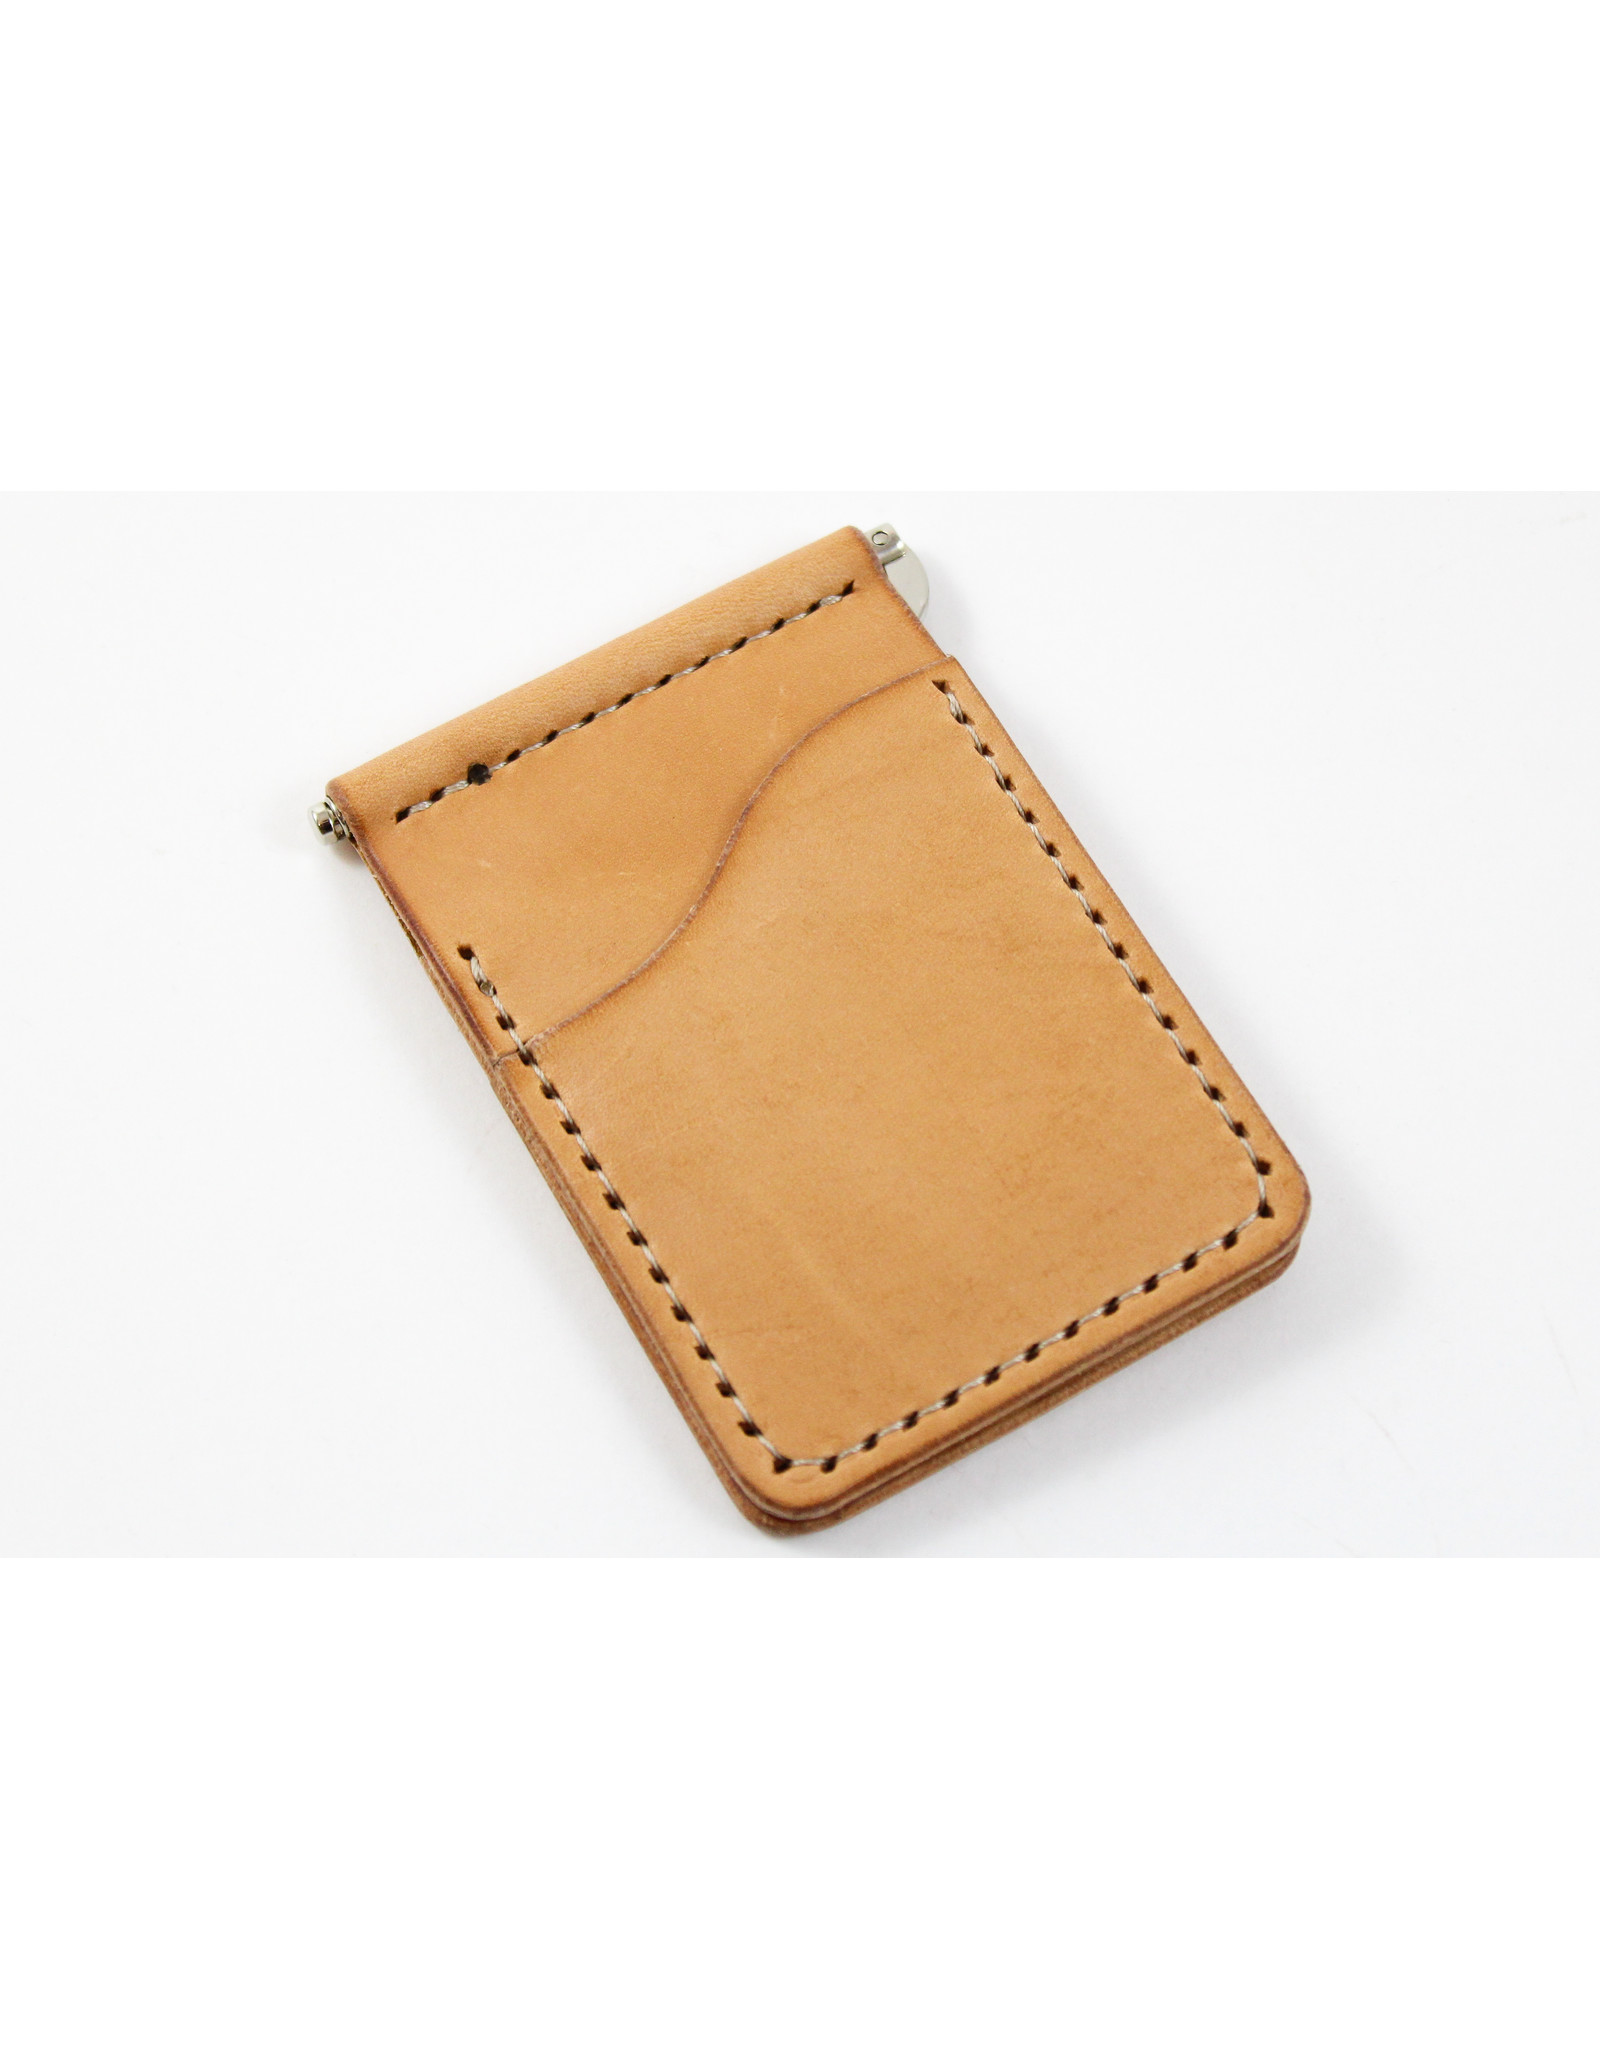 Kyle McPhee Dunvegan Money Clip Wallet by Phee's Original Goods